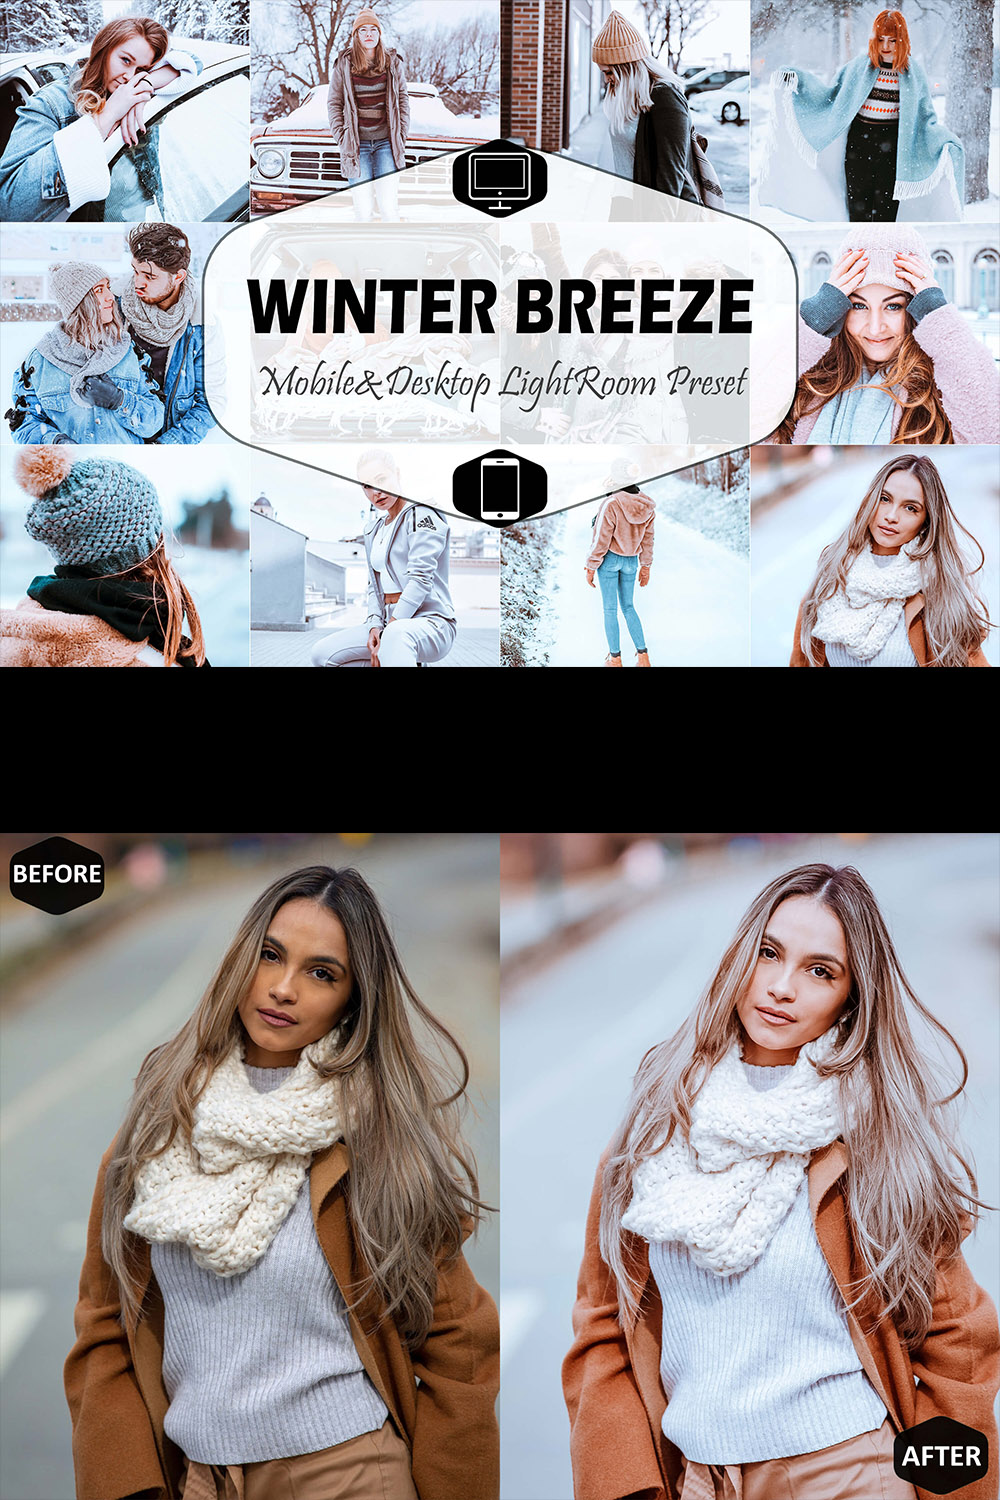 Winter Breeze Mobile & Desktop Lightroom Presets, snow instagram LR preset, trendy filter, Blogger DNG travel lifestyle fashion theme pinterest preview image.